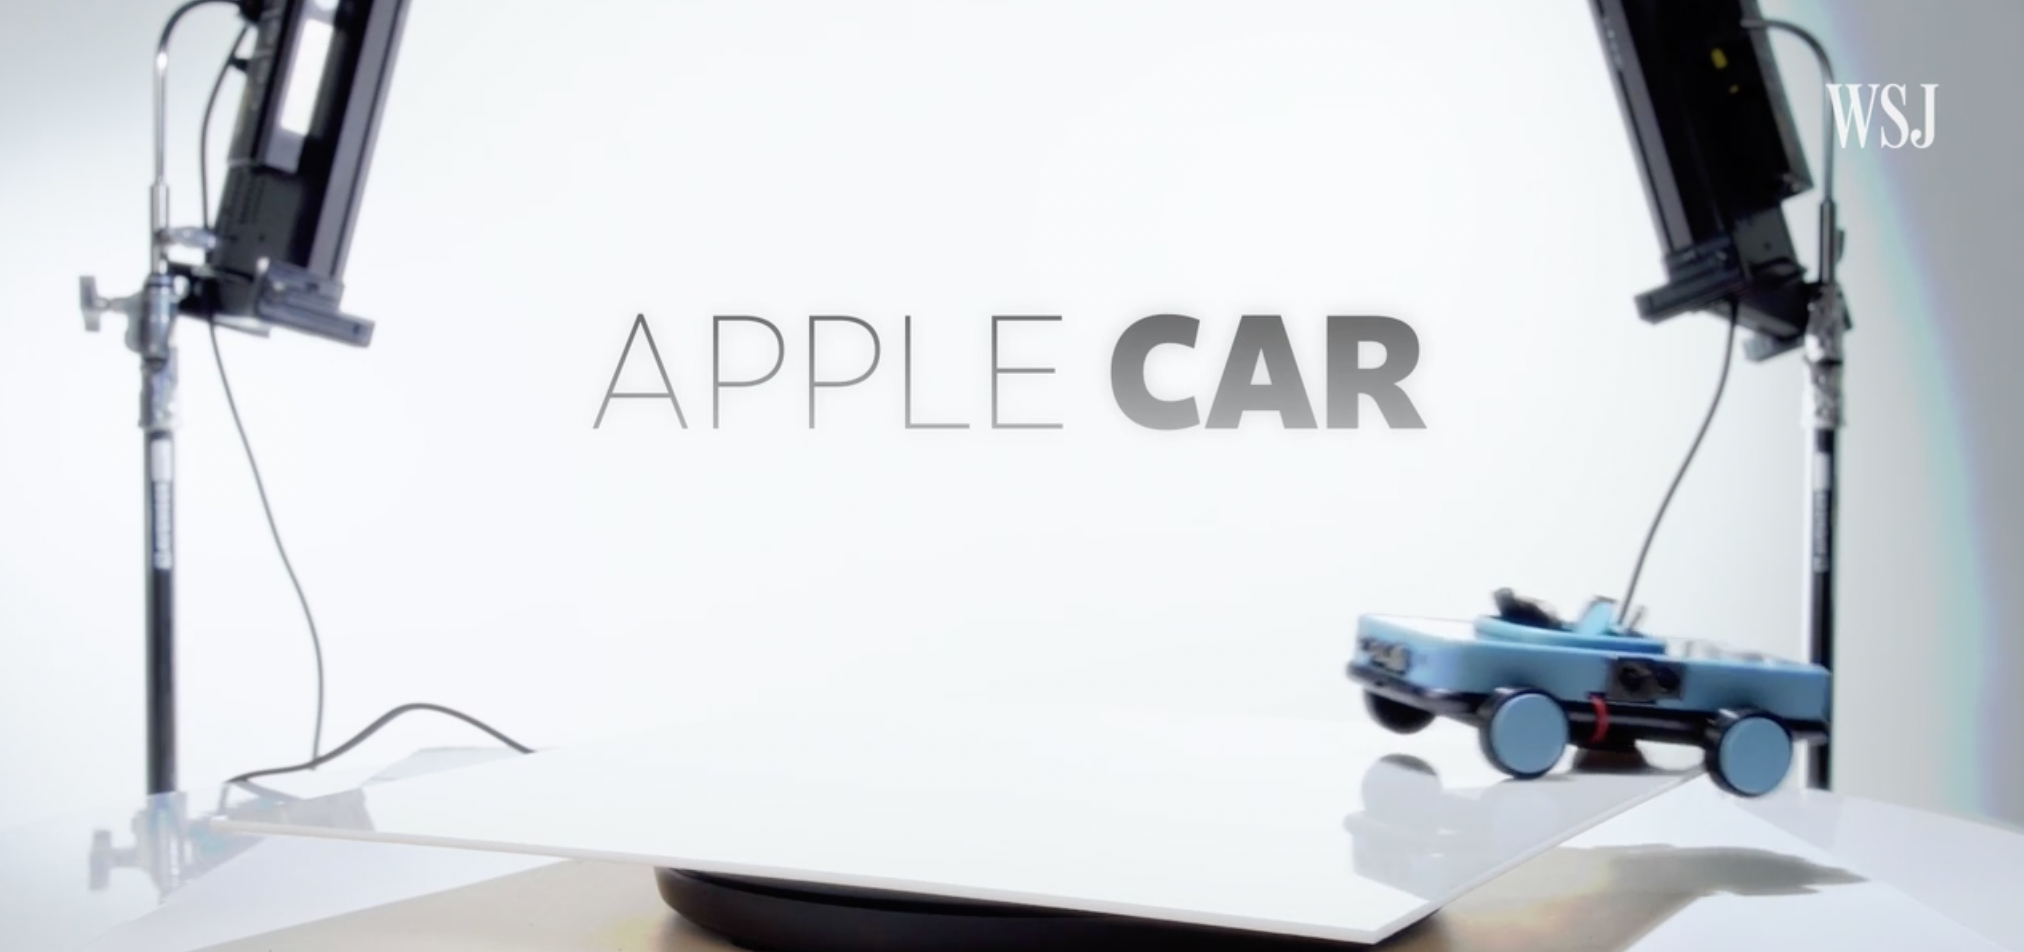 apple car wsj video